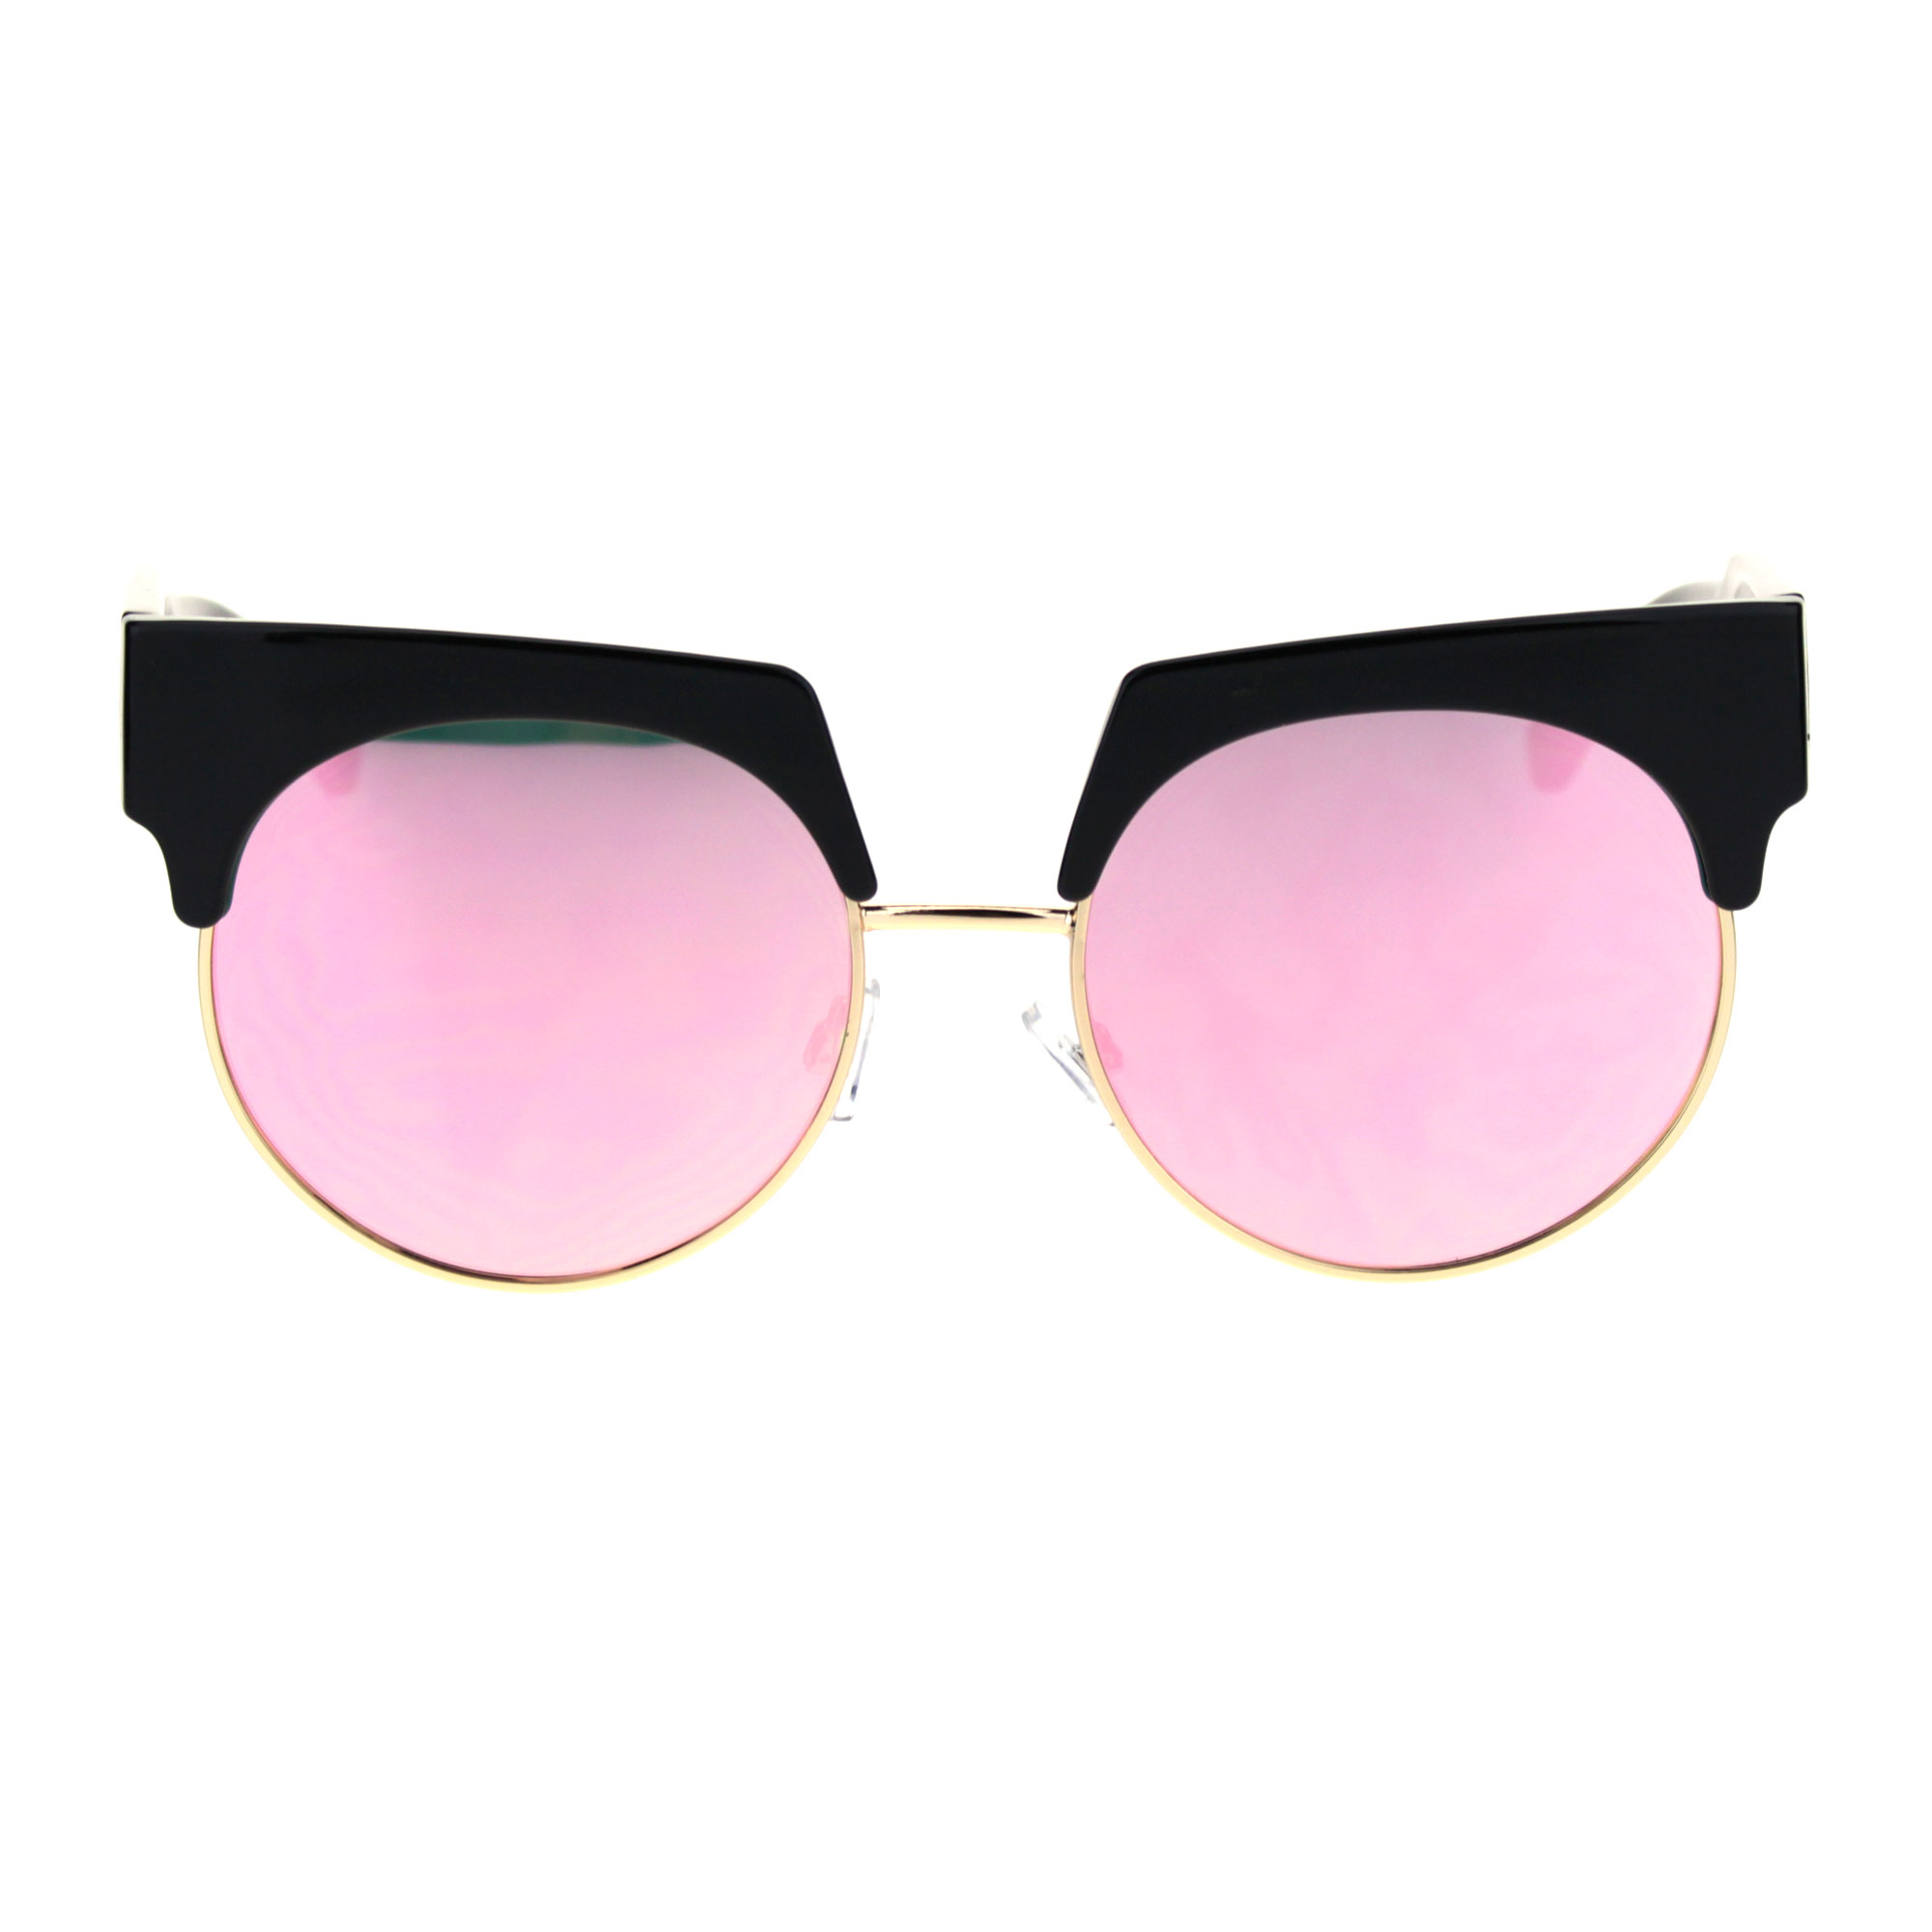 Womens Half Rim Eyebrow Horn Round Retro Sunglasses Black Gold Pink Mirror - image 1 of 4